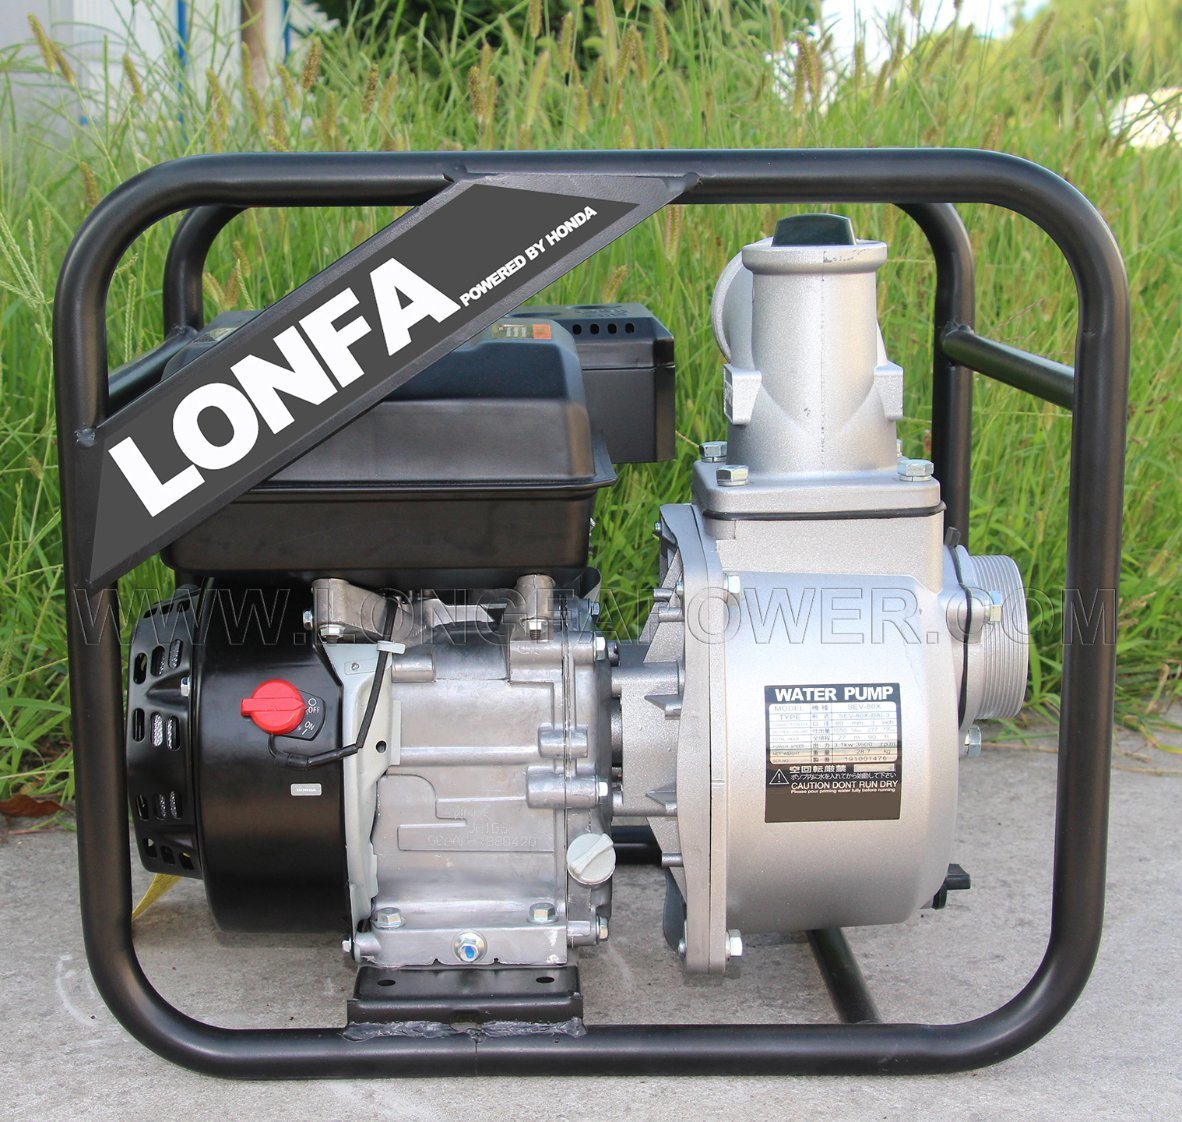 Powered by Oiriginal Honda Engine Gx160 Gx200 5.5HP 6.5HP 7.0HP Gasoline Petrol Water Pump